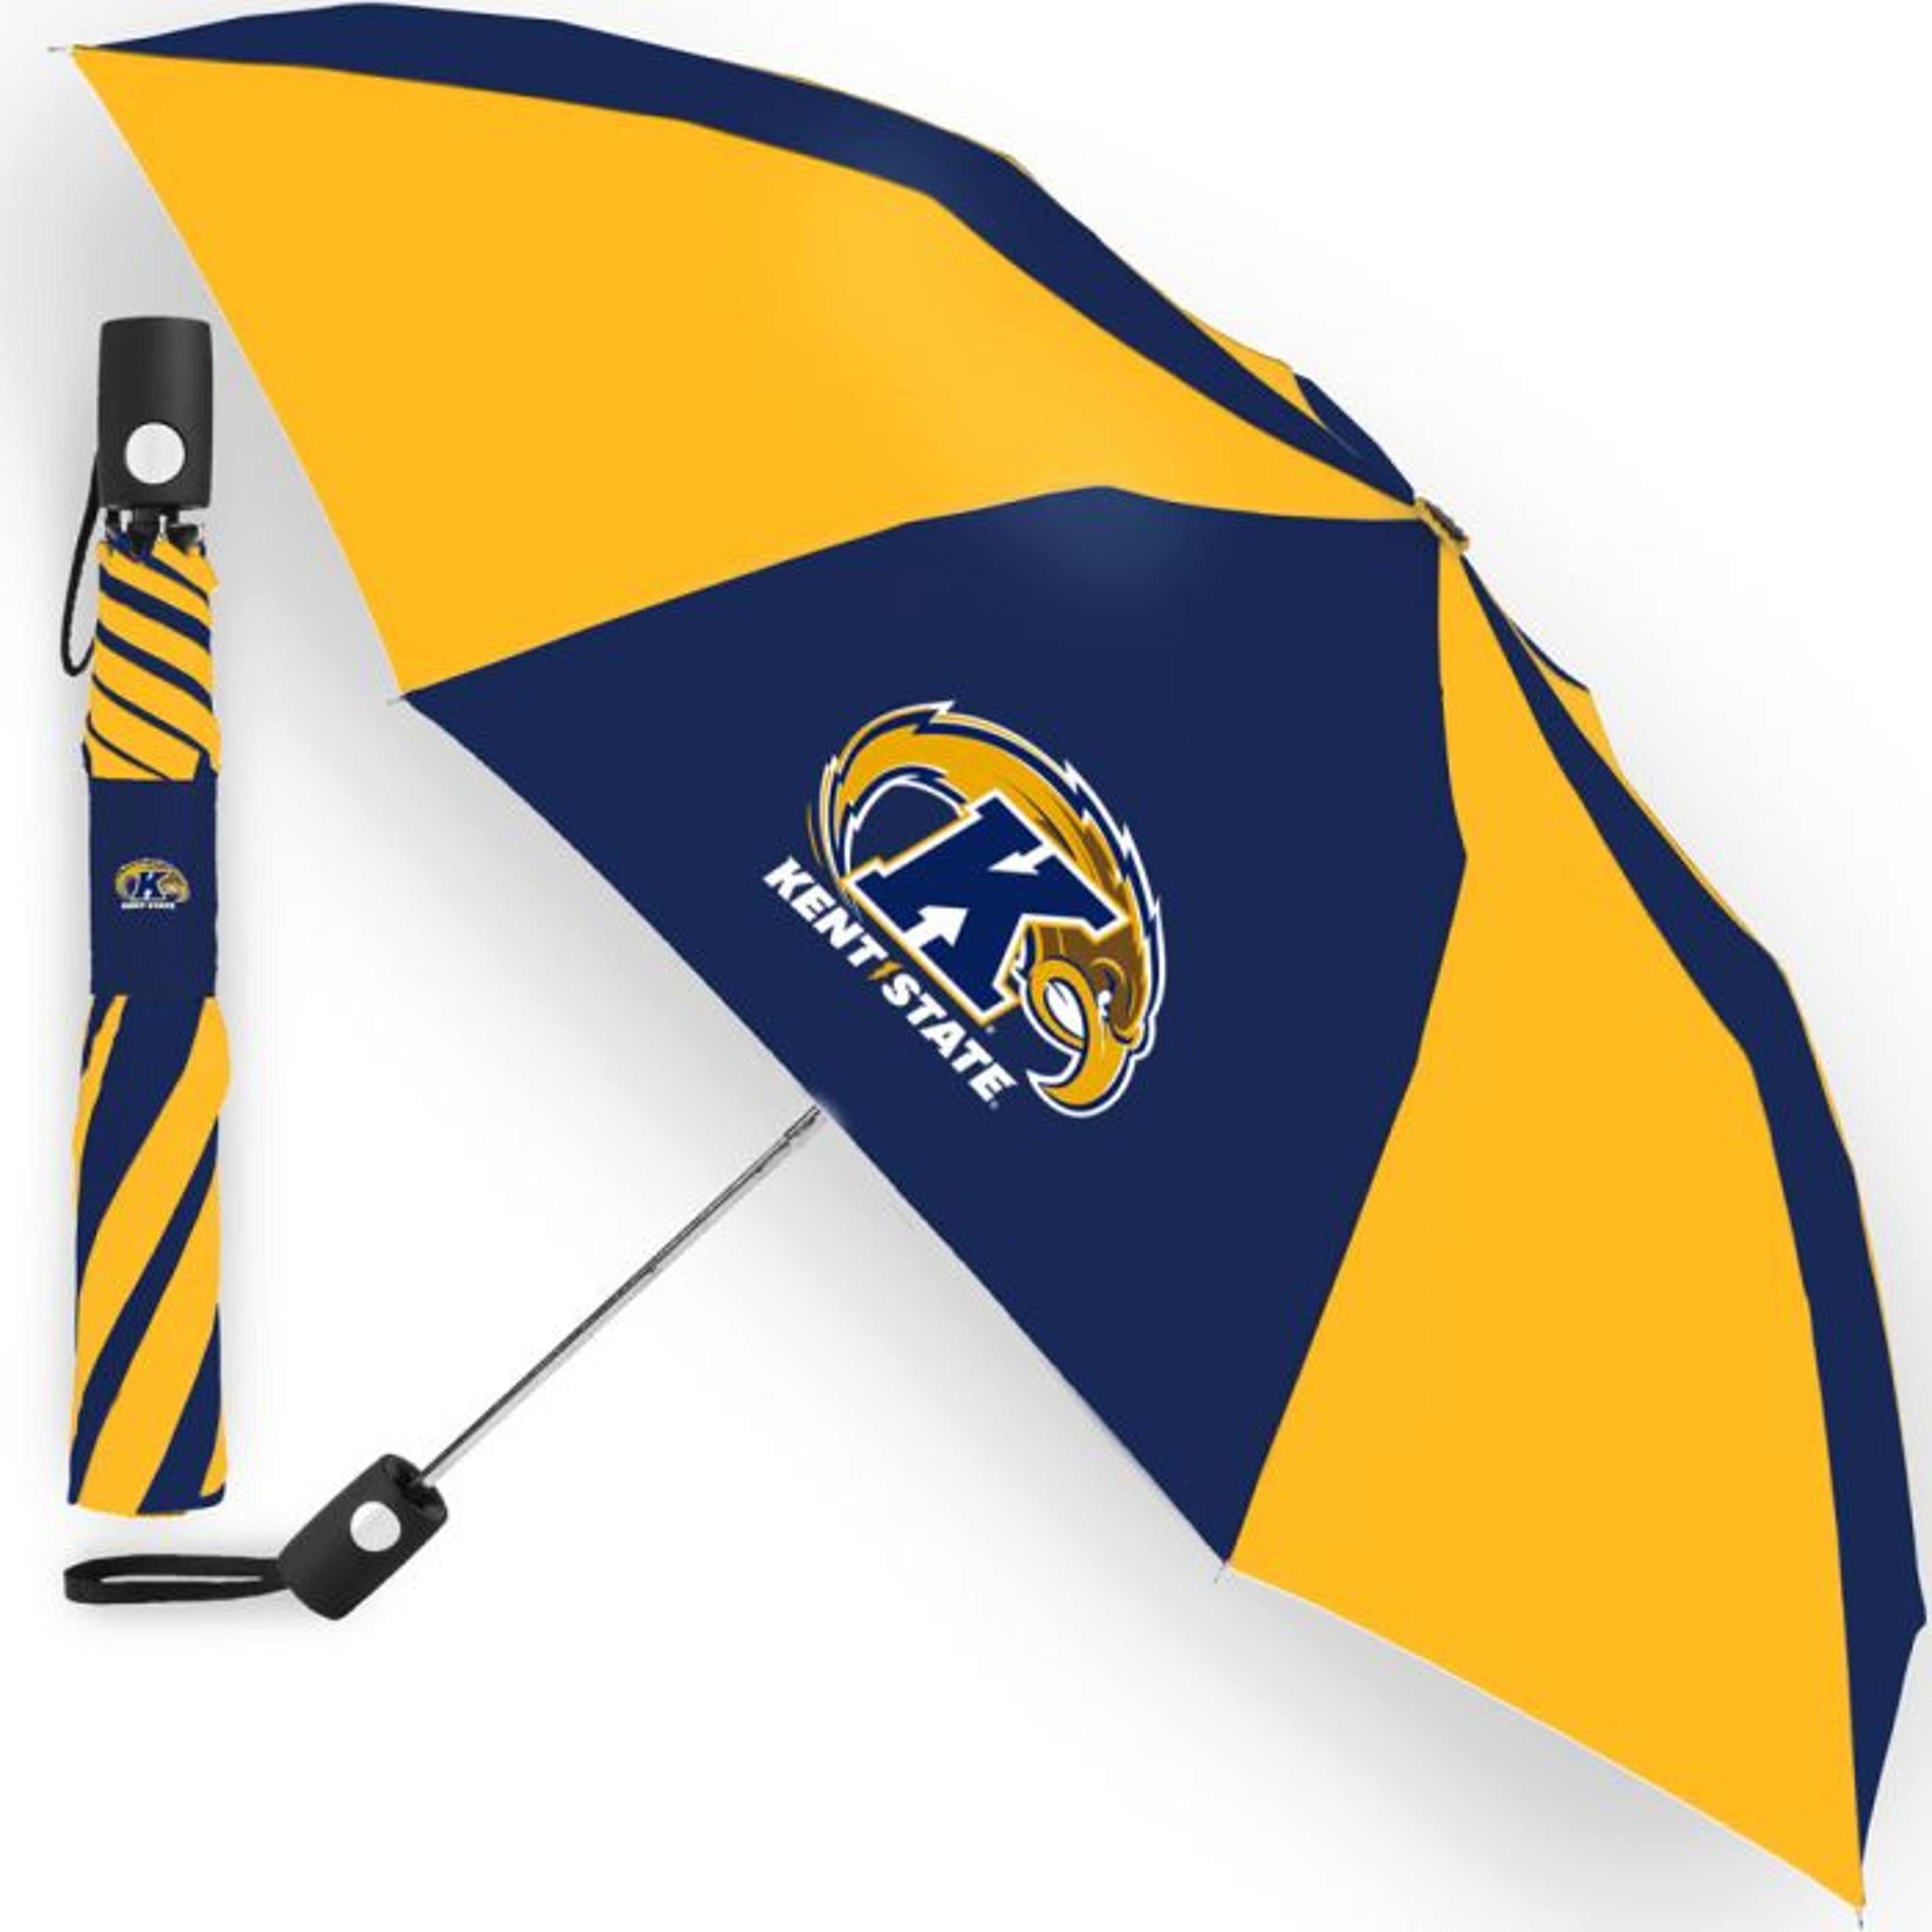 Kent State Navy Wincraft Umbrella